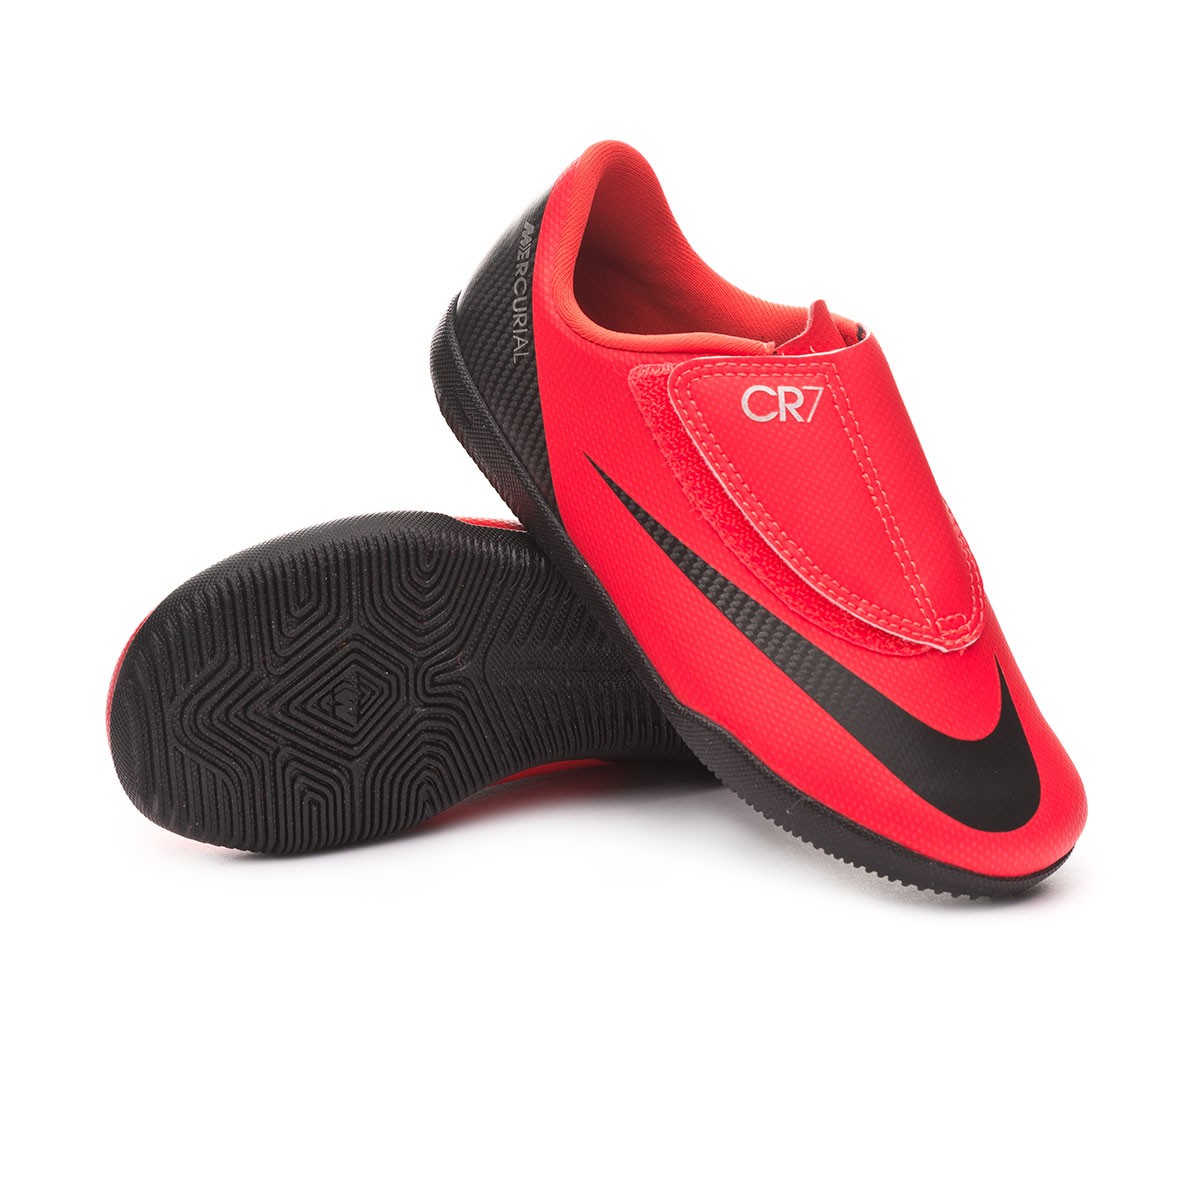 cr7 futsal boots